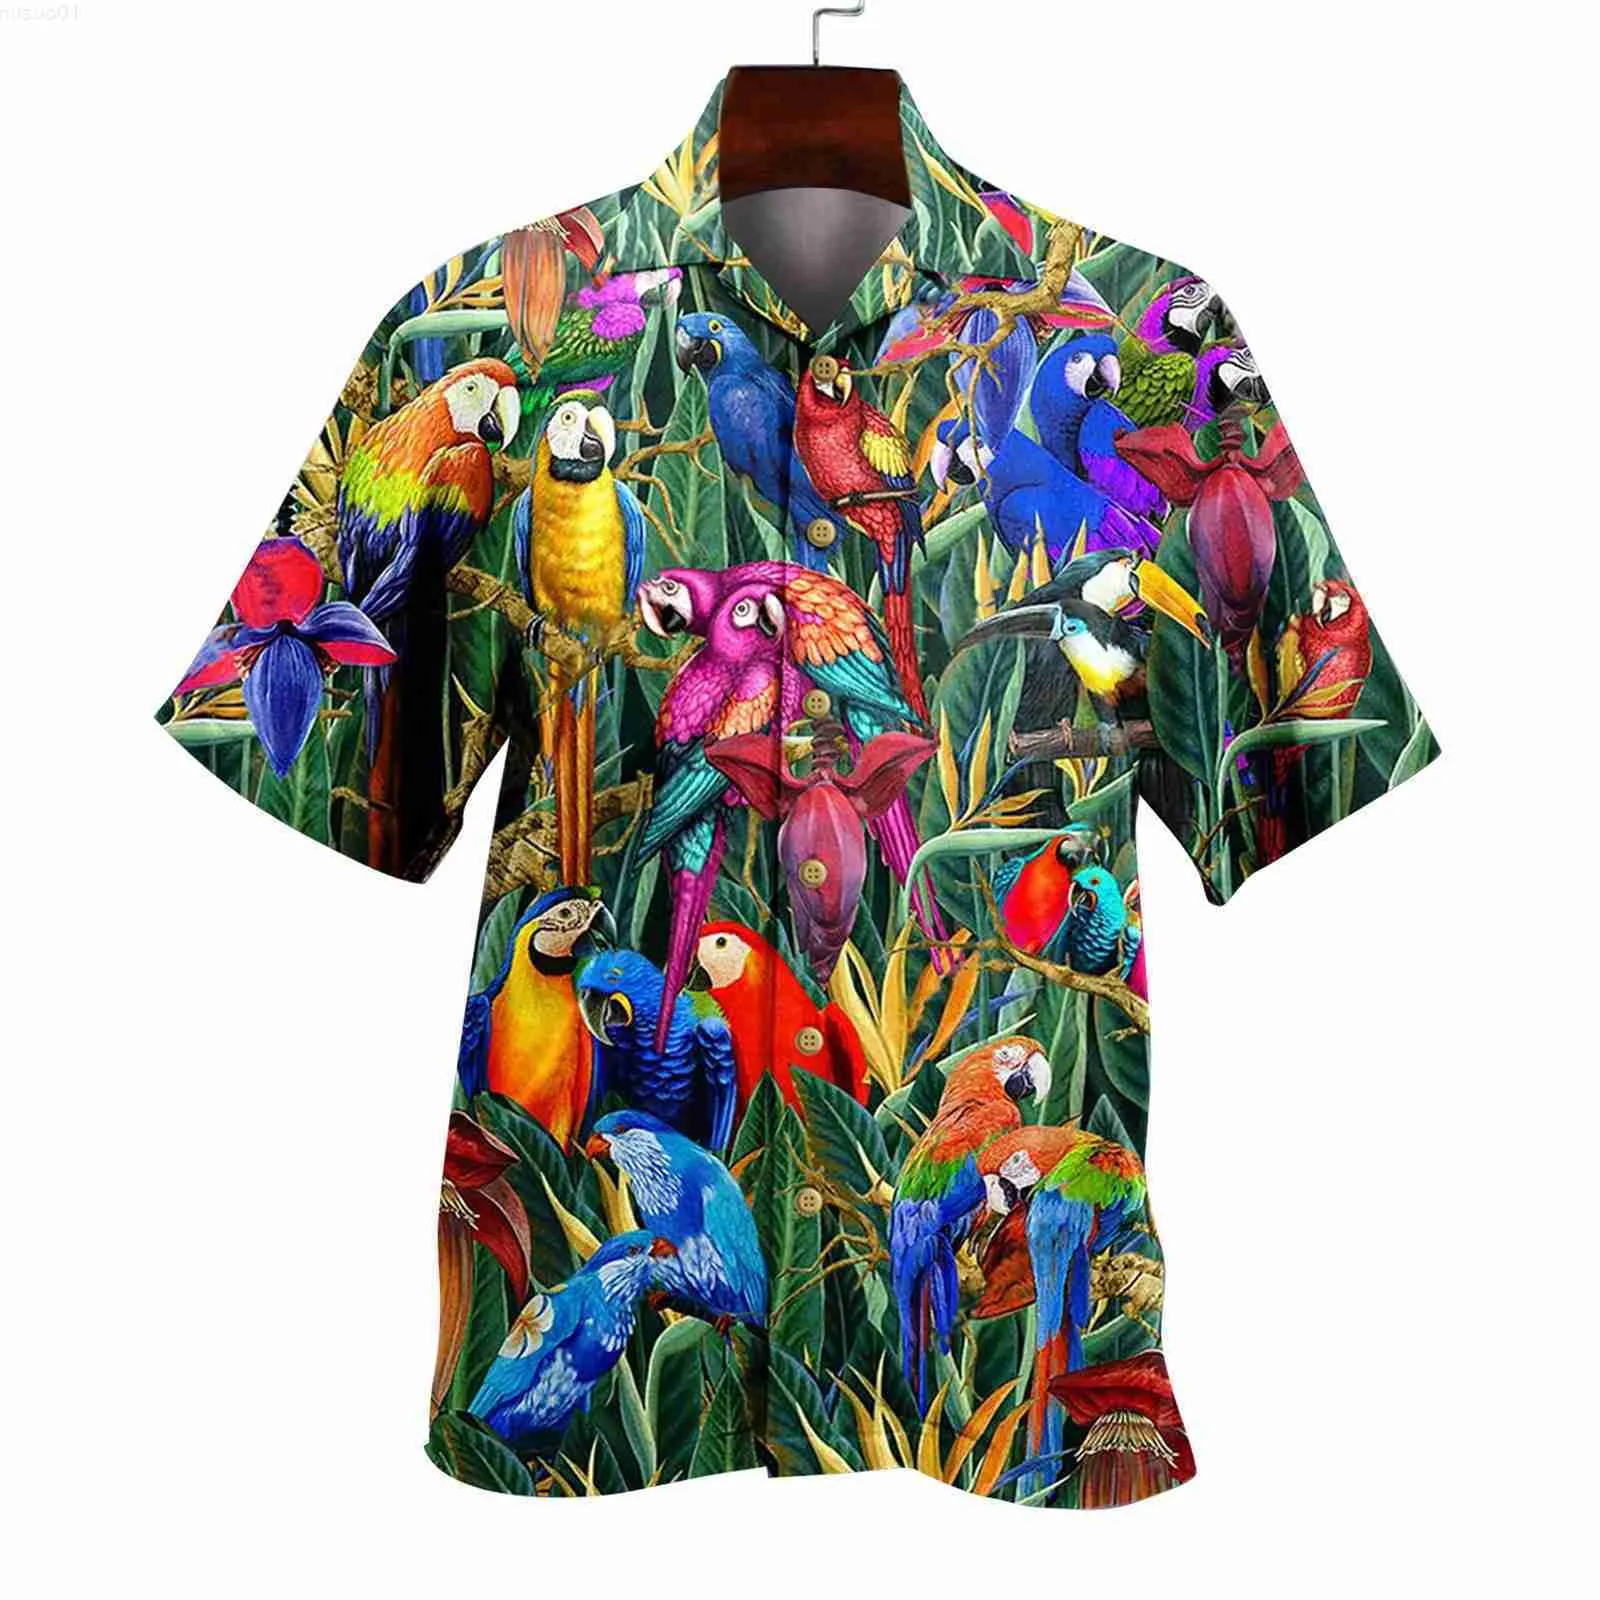 Camisas casuais masculinas Moda Parrot Plant Print Shirt Camisa masculina Haiian Praia Manga curta Tops Camisetas verão oversized 5xl camisa streetwear L230715